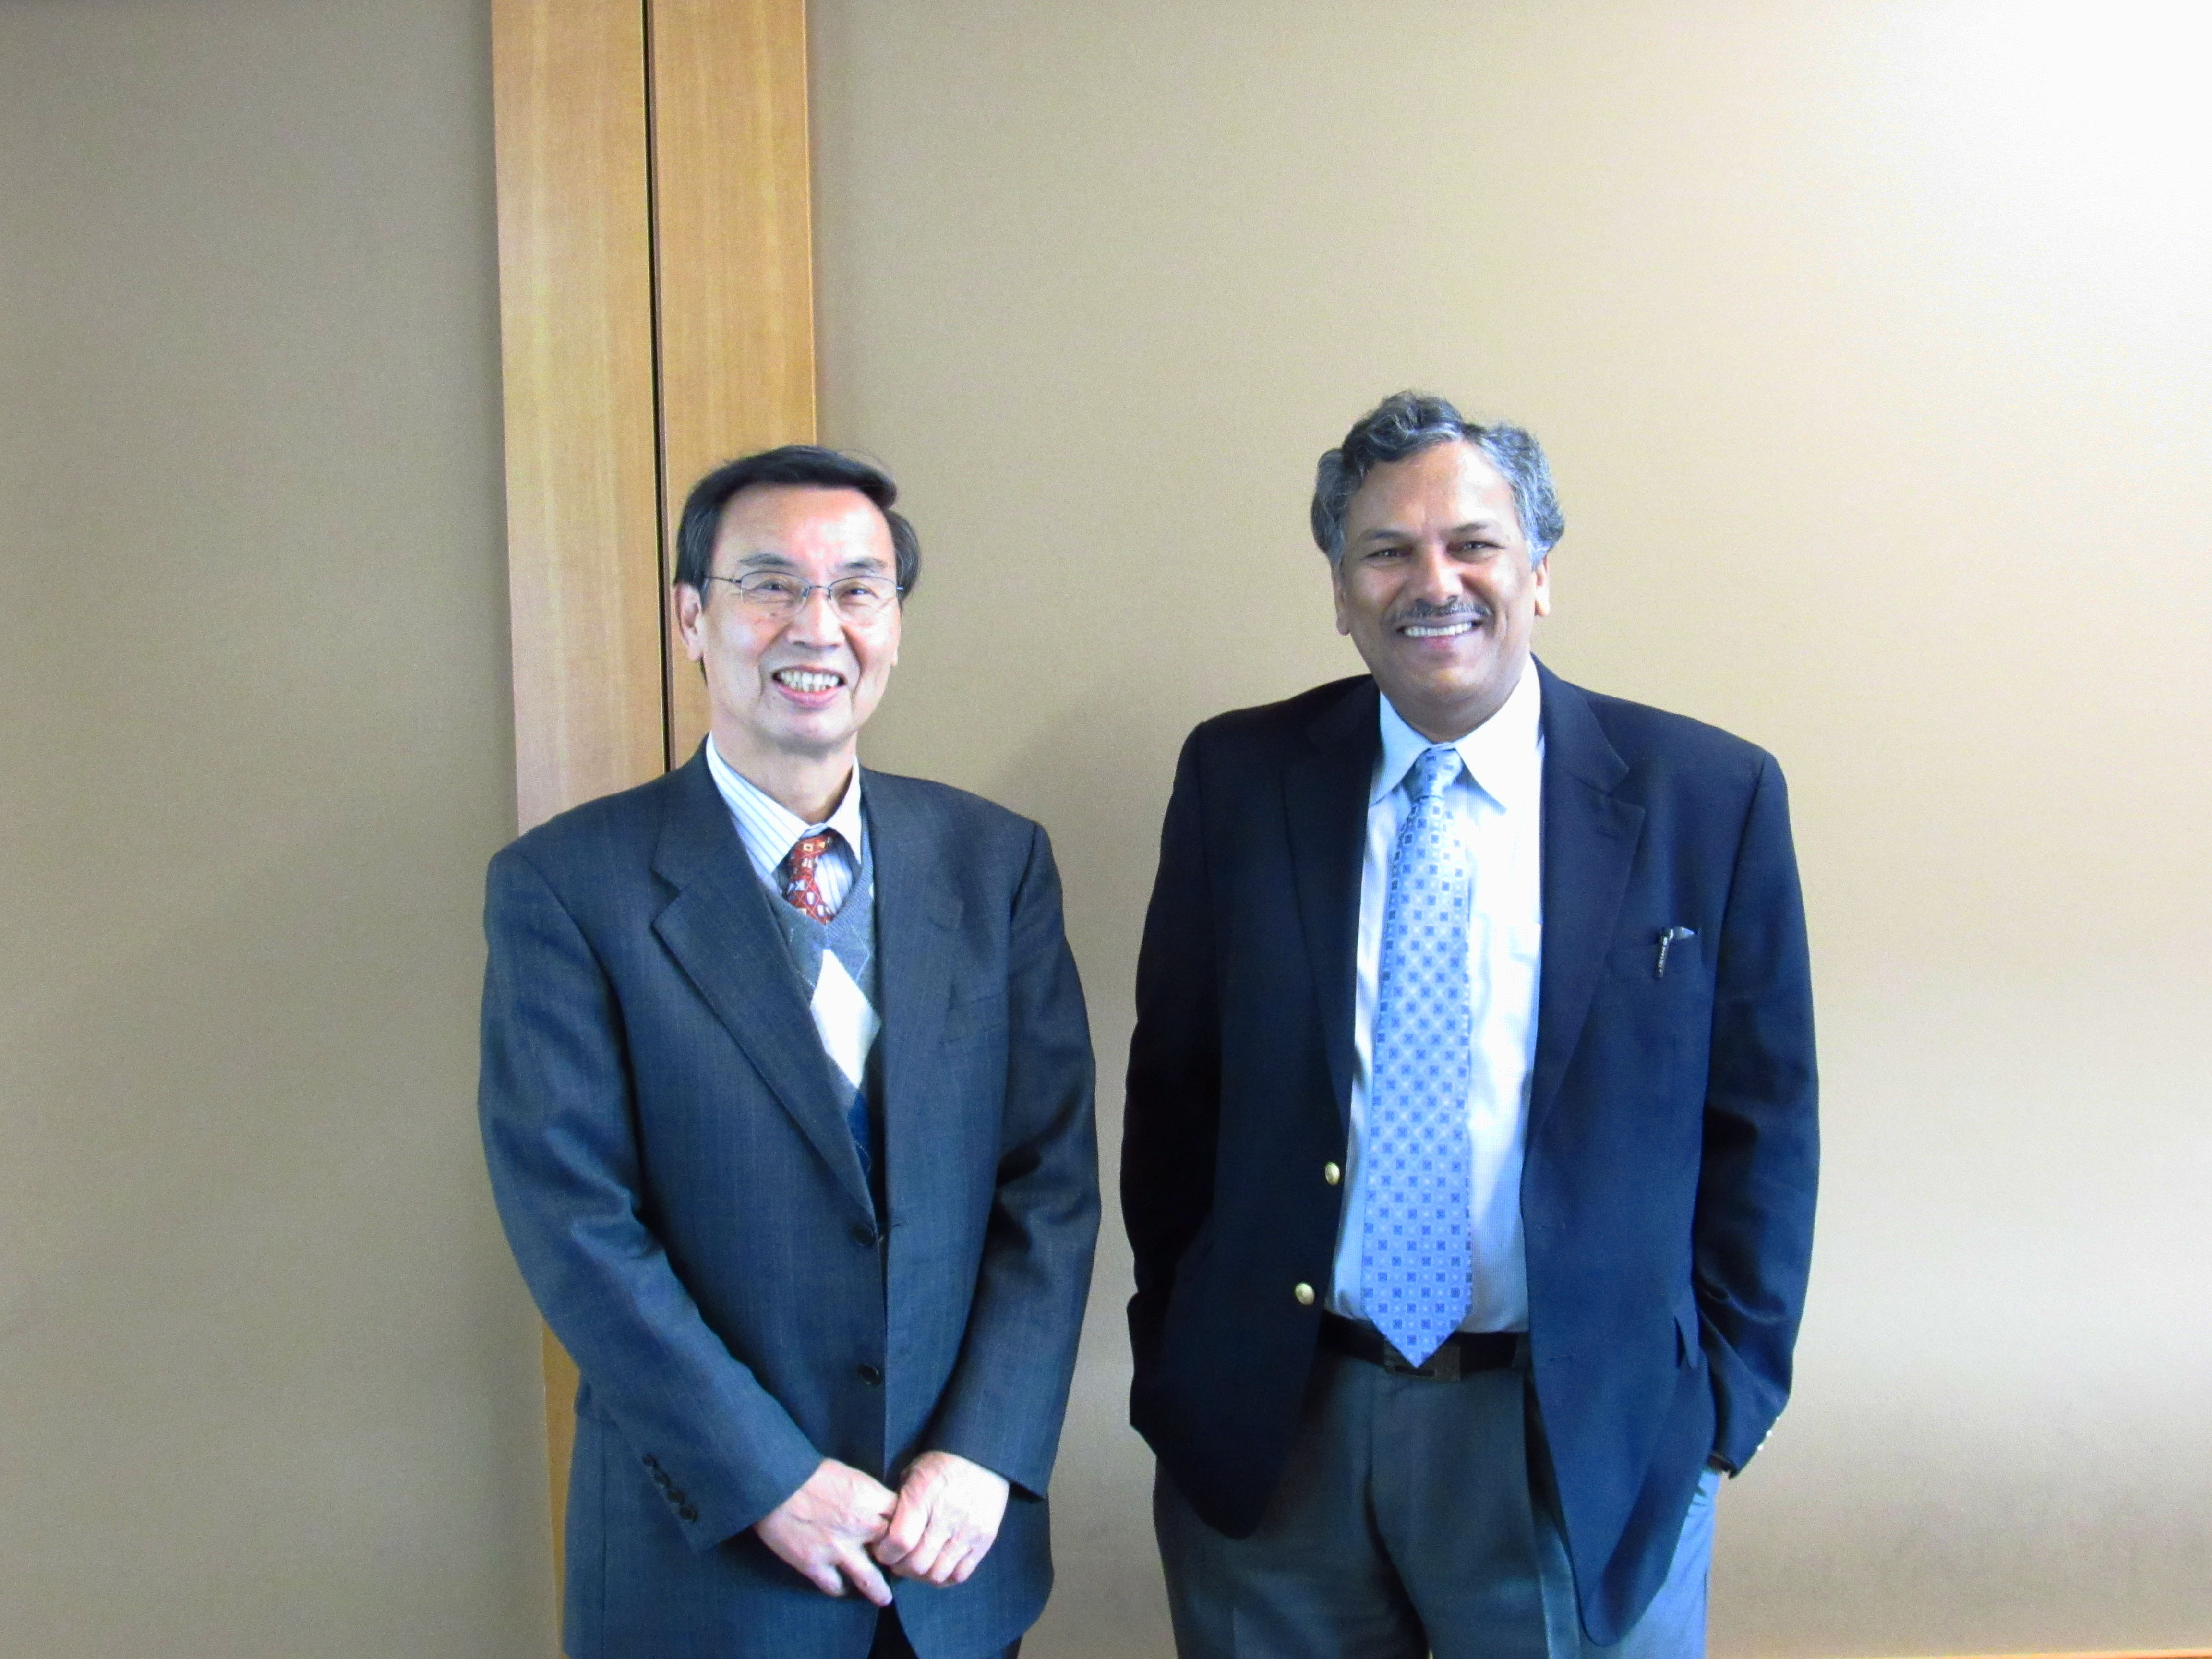 Dr. Yoshio Bando poses with Professor Vinayak Dravid, Director of NUANCE.